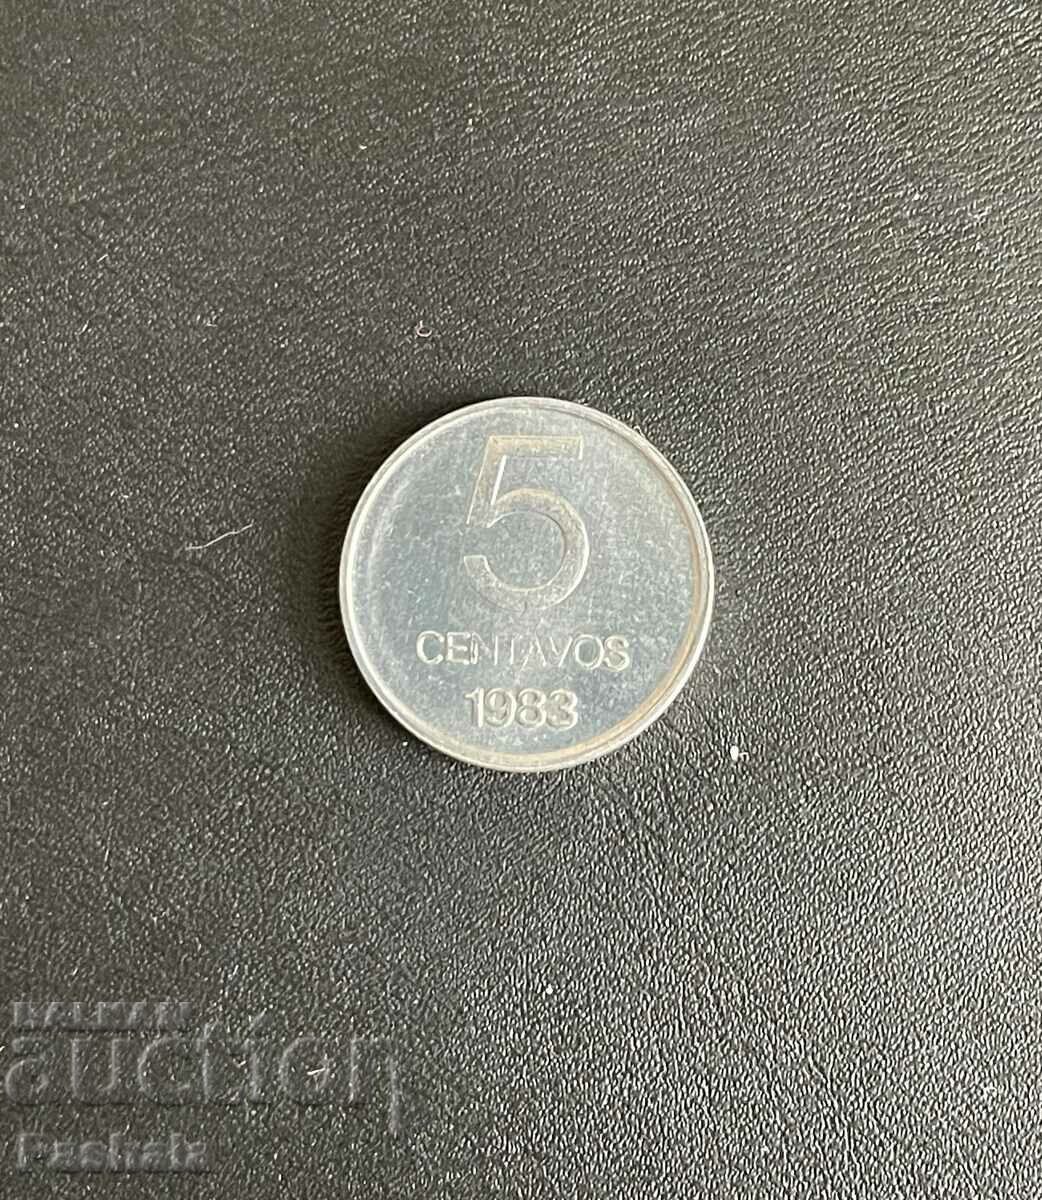 Argentina 1 centavo1983